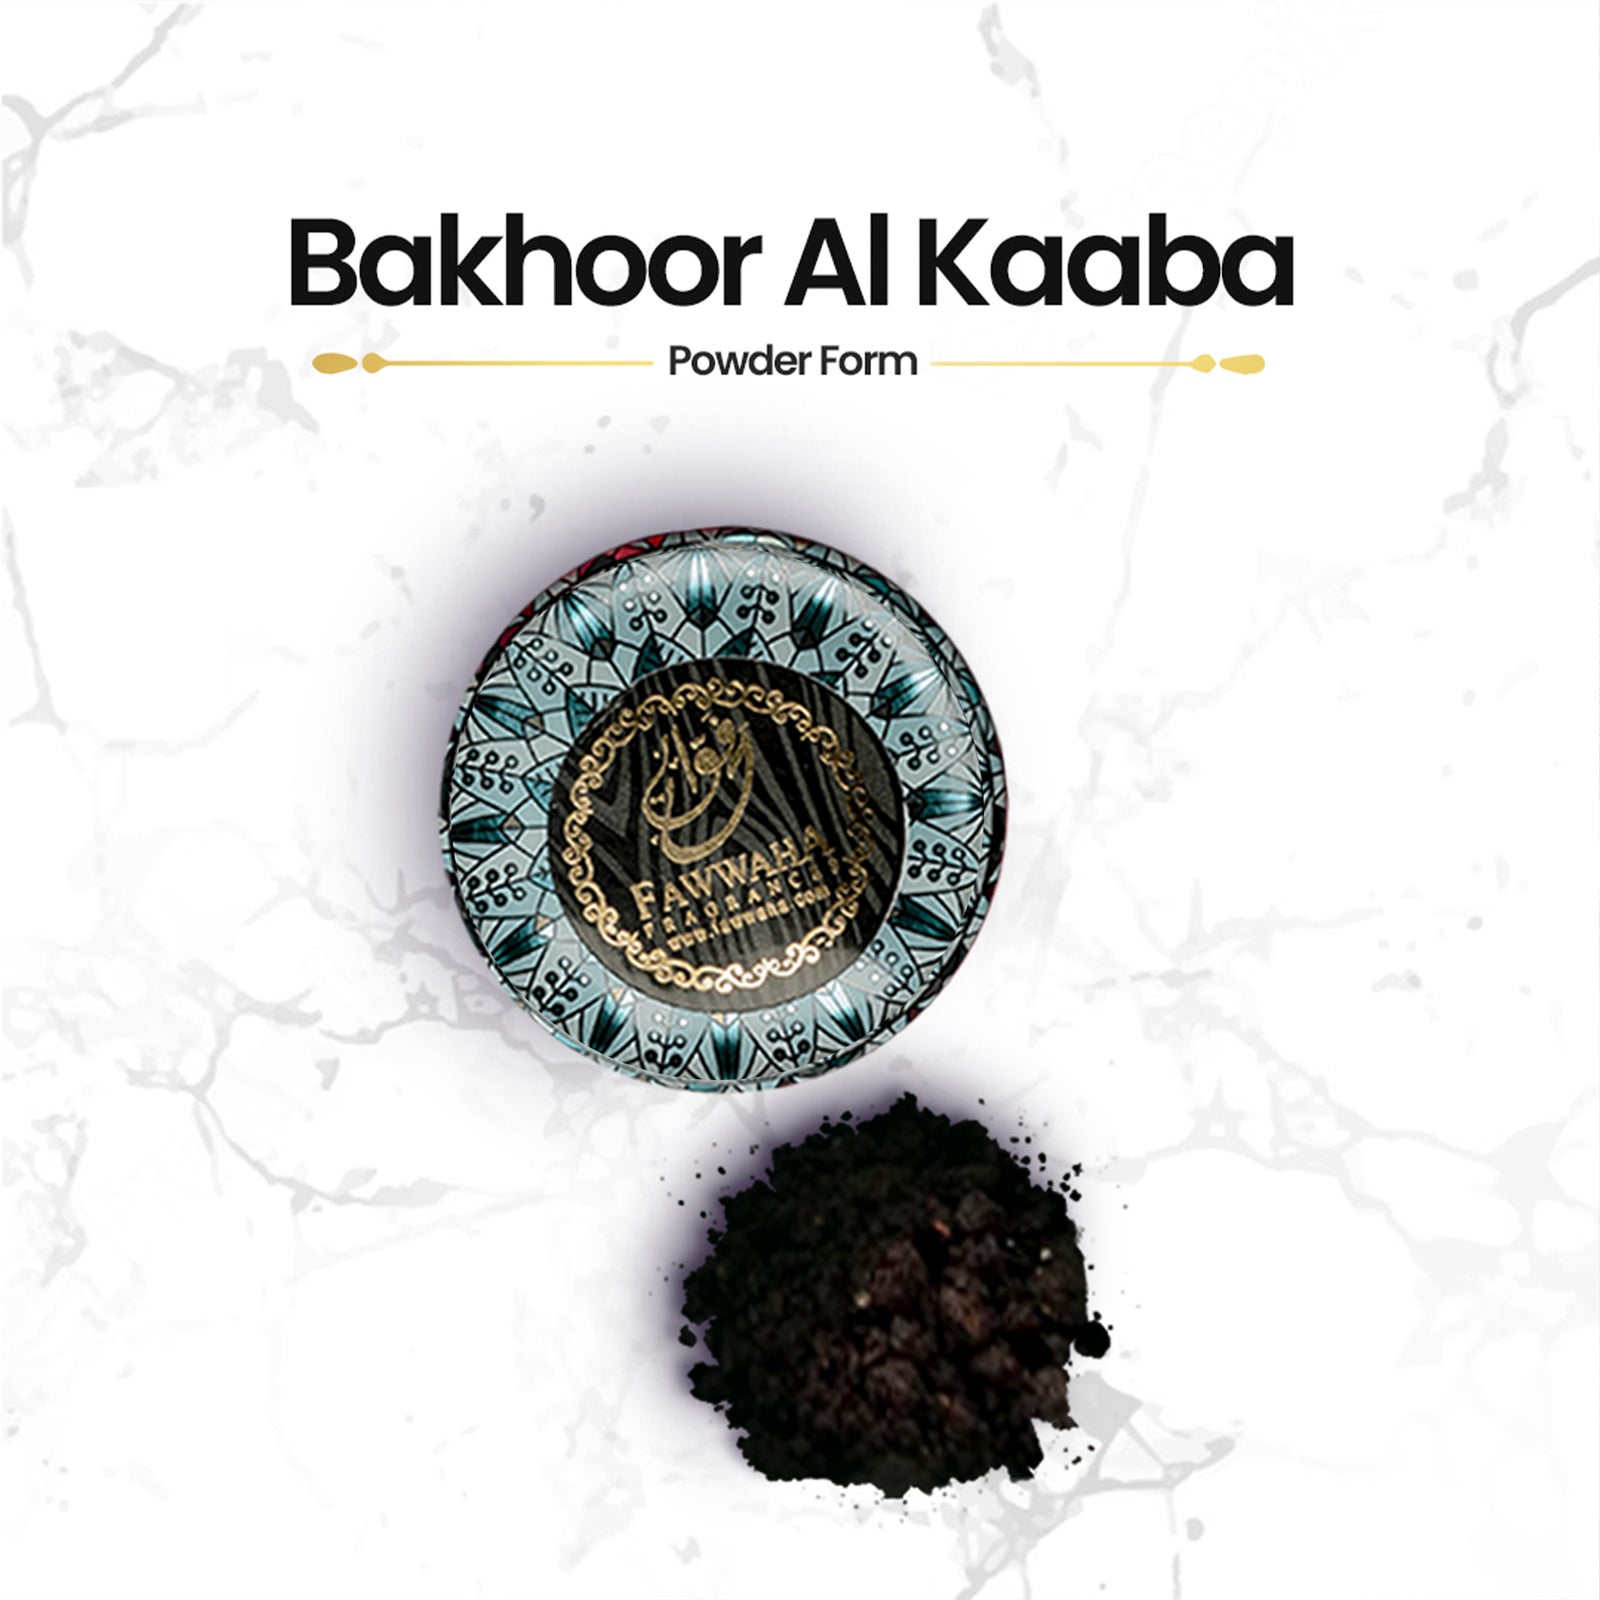 BAKHOOR OUD AL ASWAD - Fawwaha Fragrances